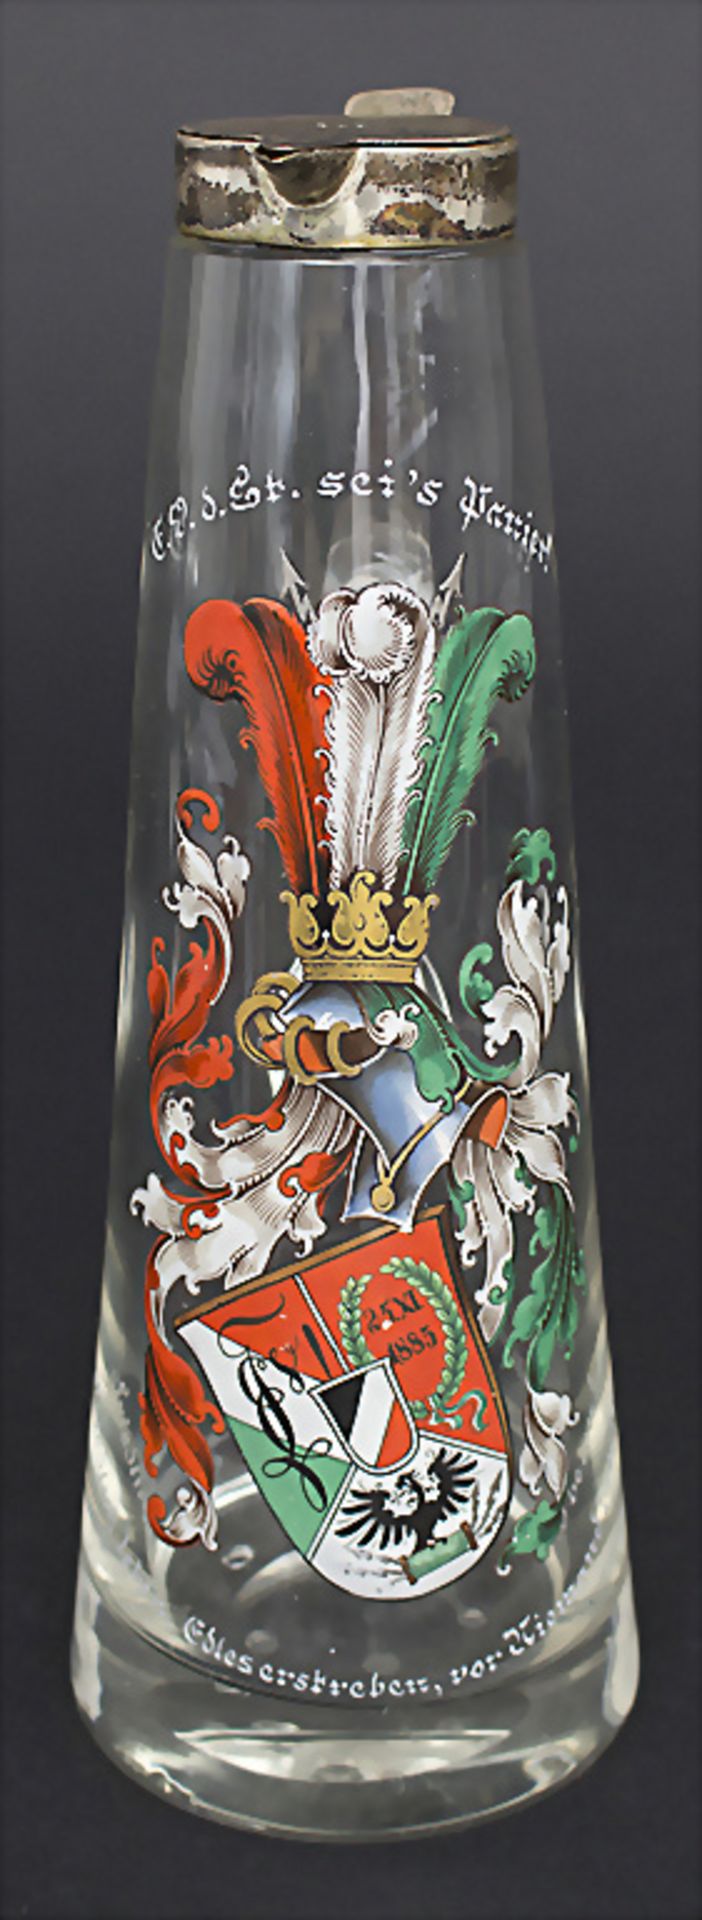 Burschenschaft-Schenkkrug / A fraternity glass jug, um 1903